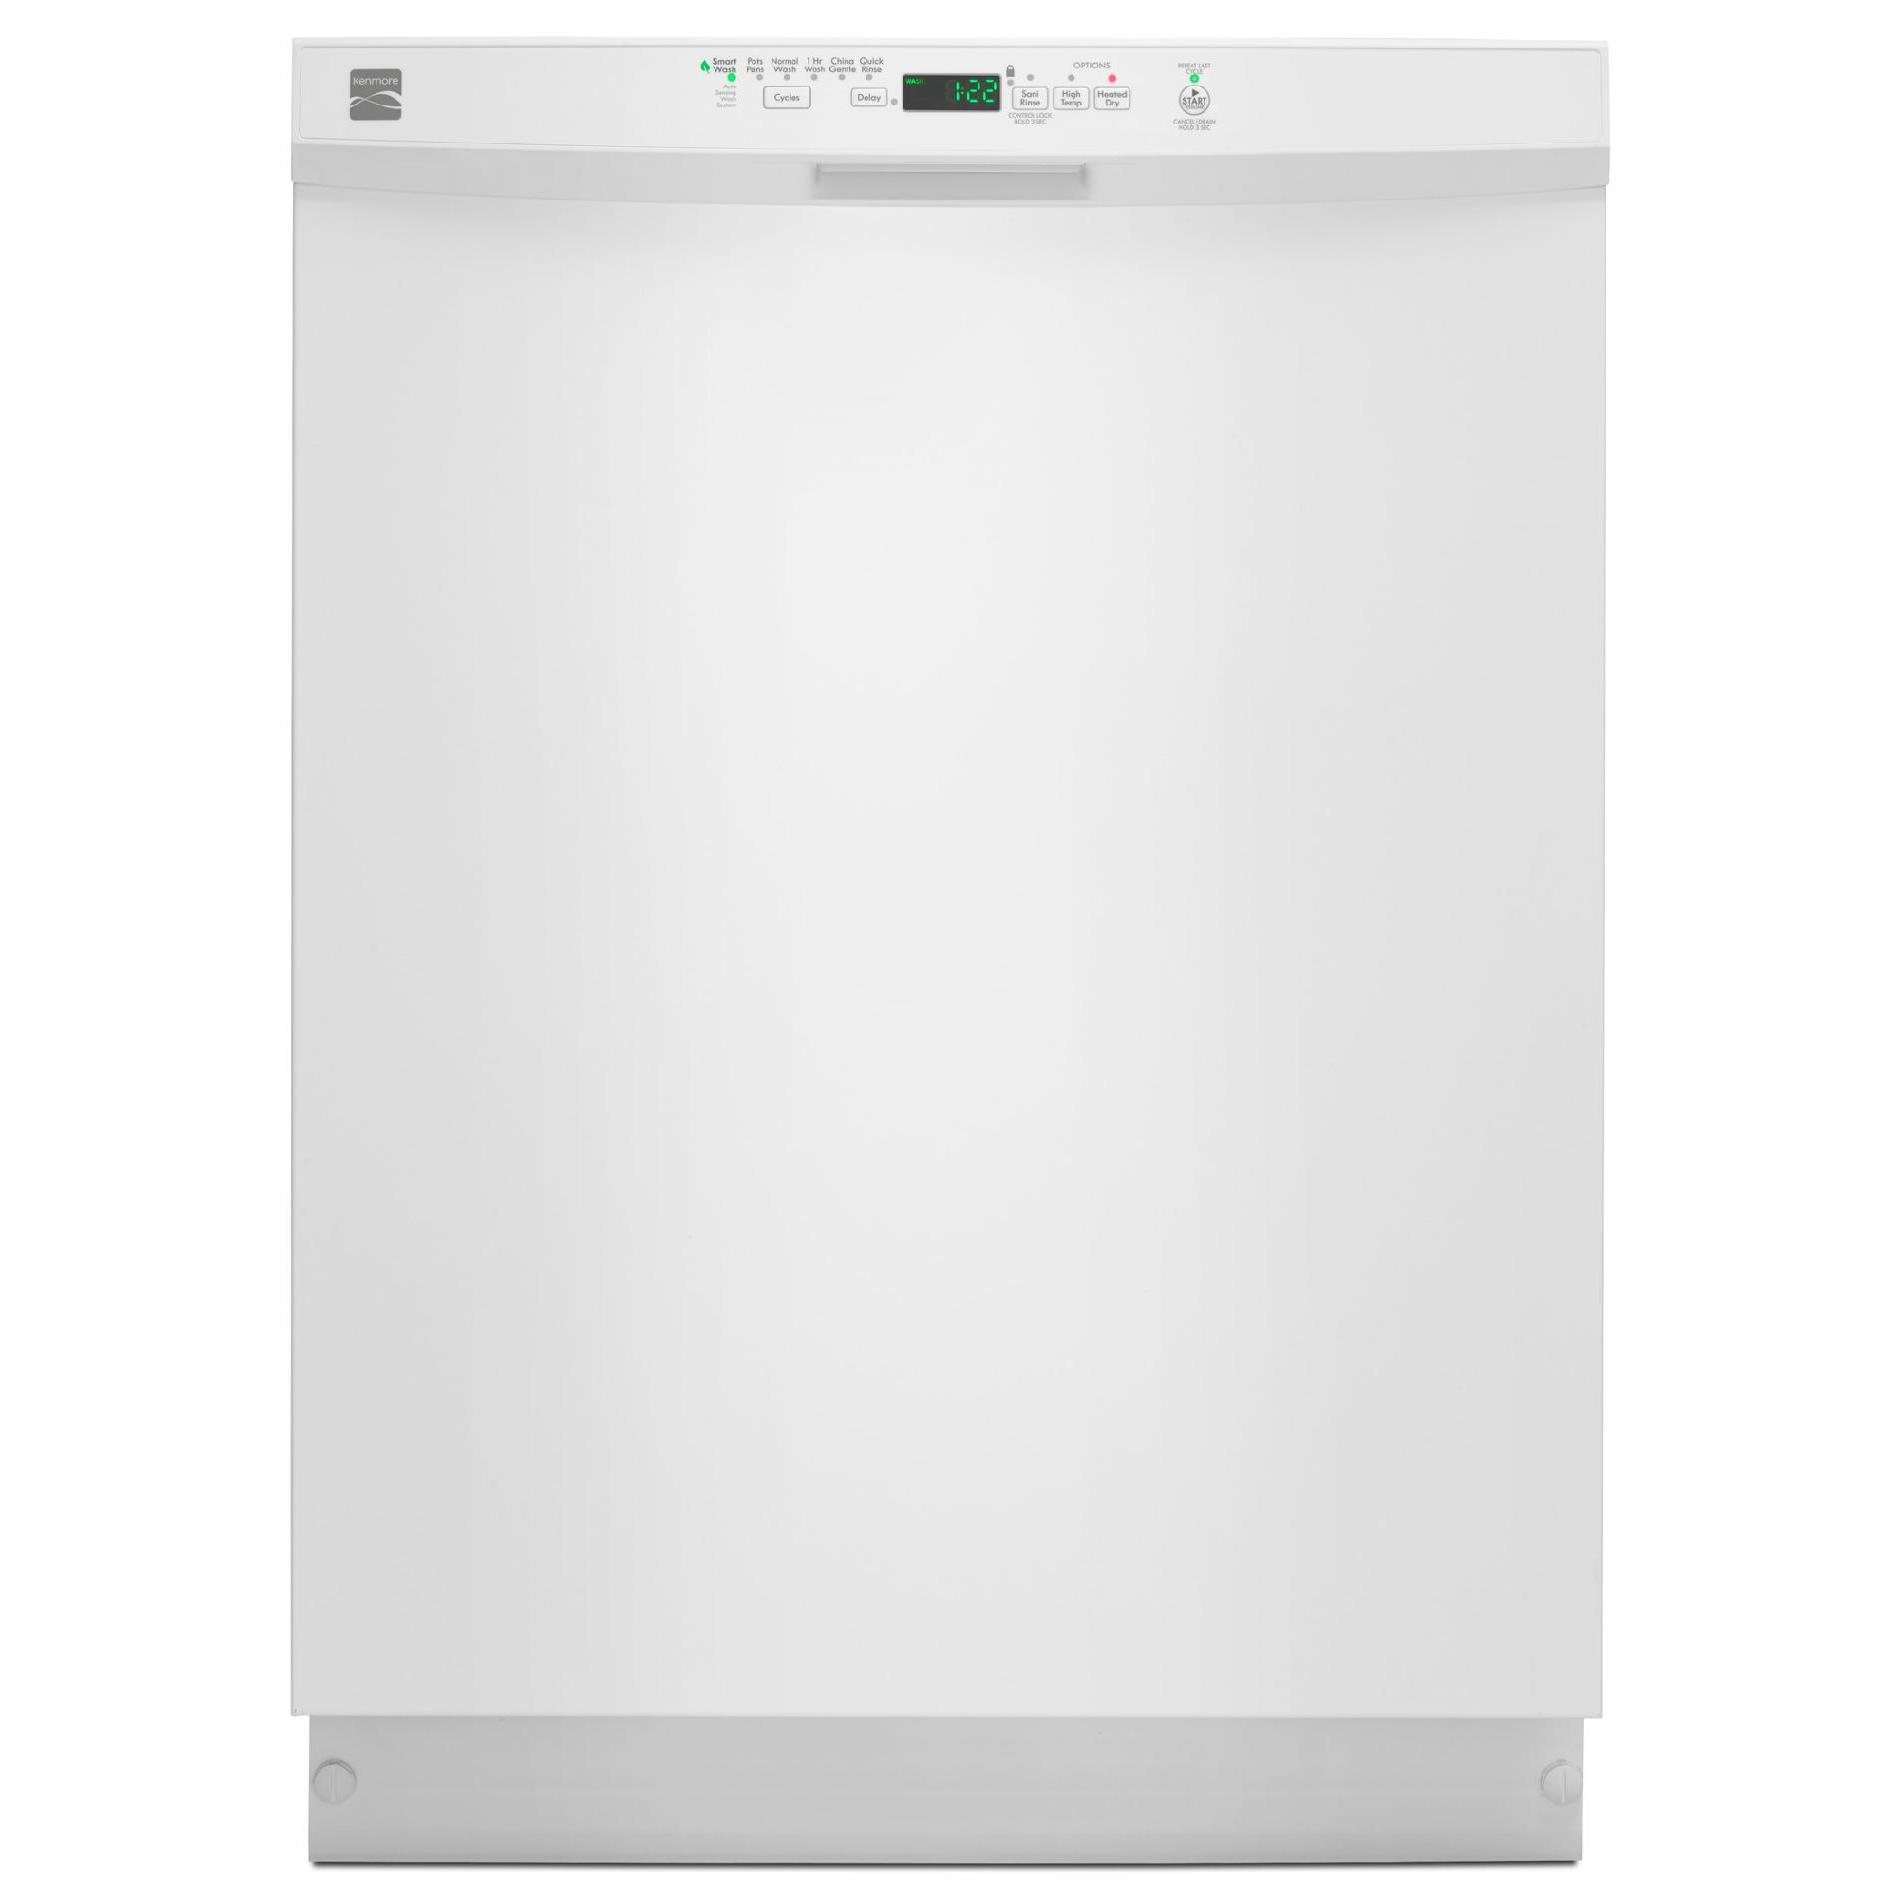 kenmore dishwasher front panel